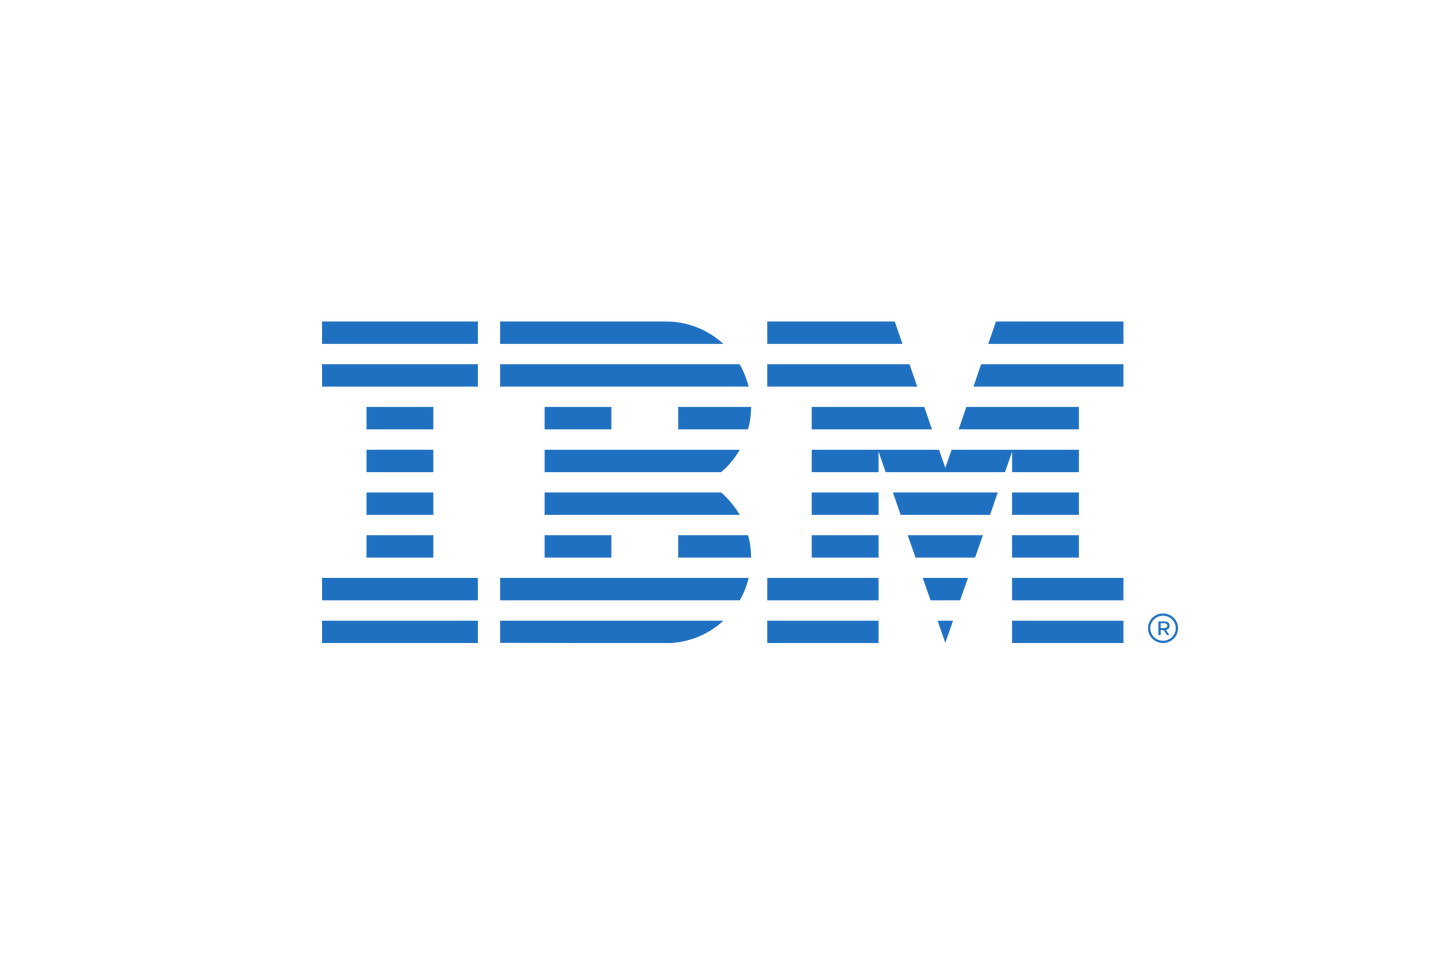 IBM Sterling B2B Services Collaboration Network Document per Annum